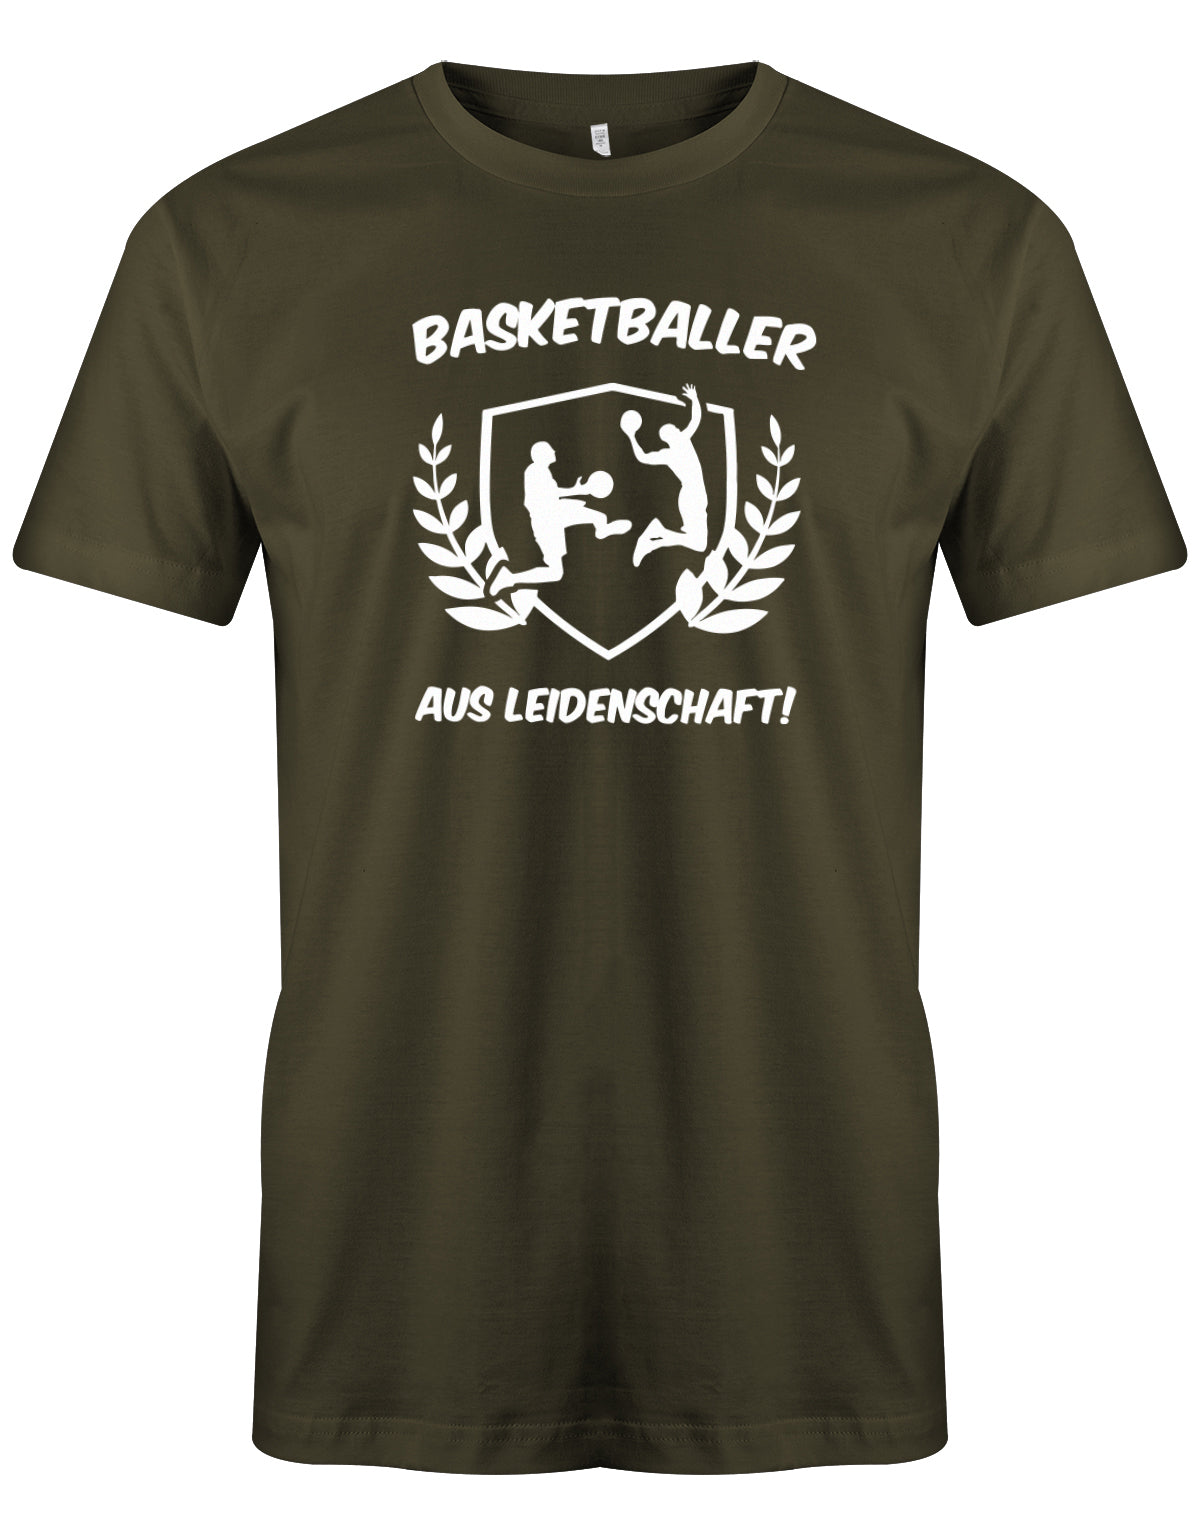 herren-shirt-army3R6qprEErMajl